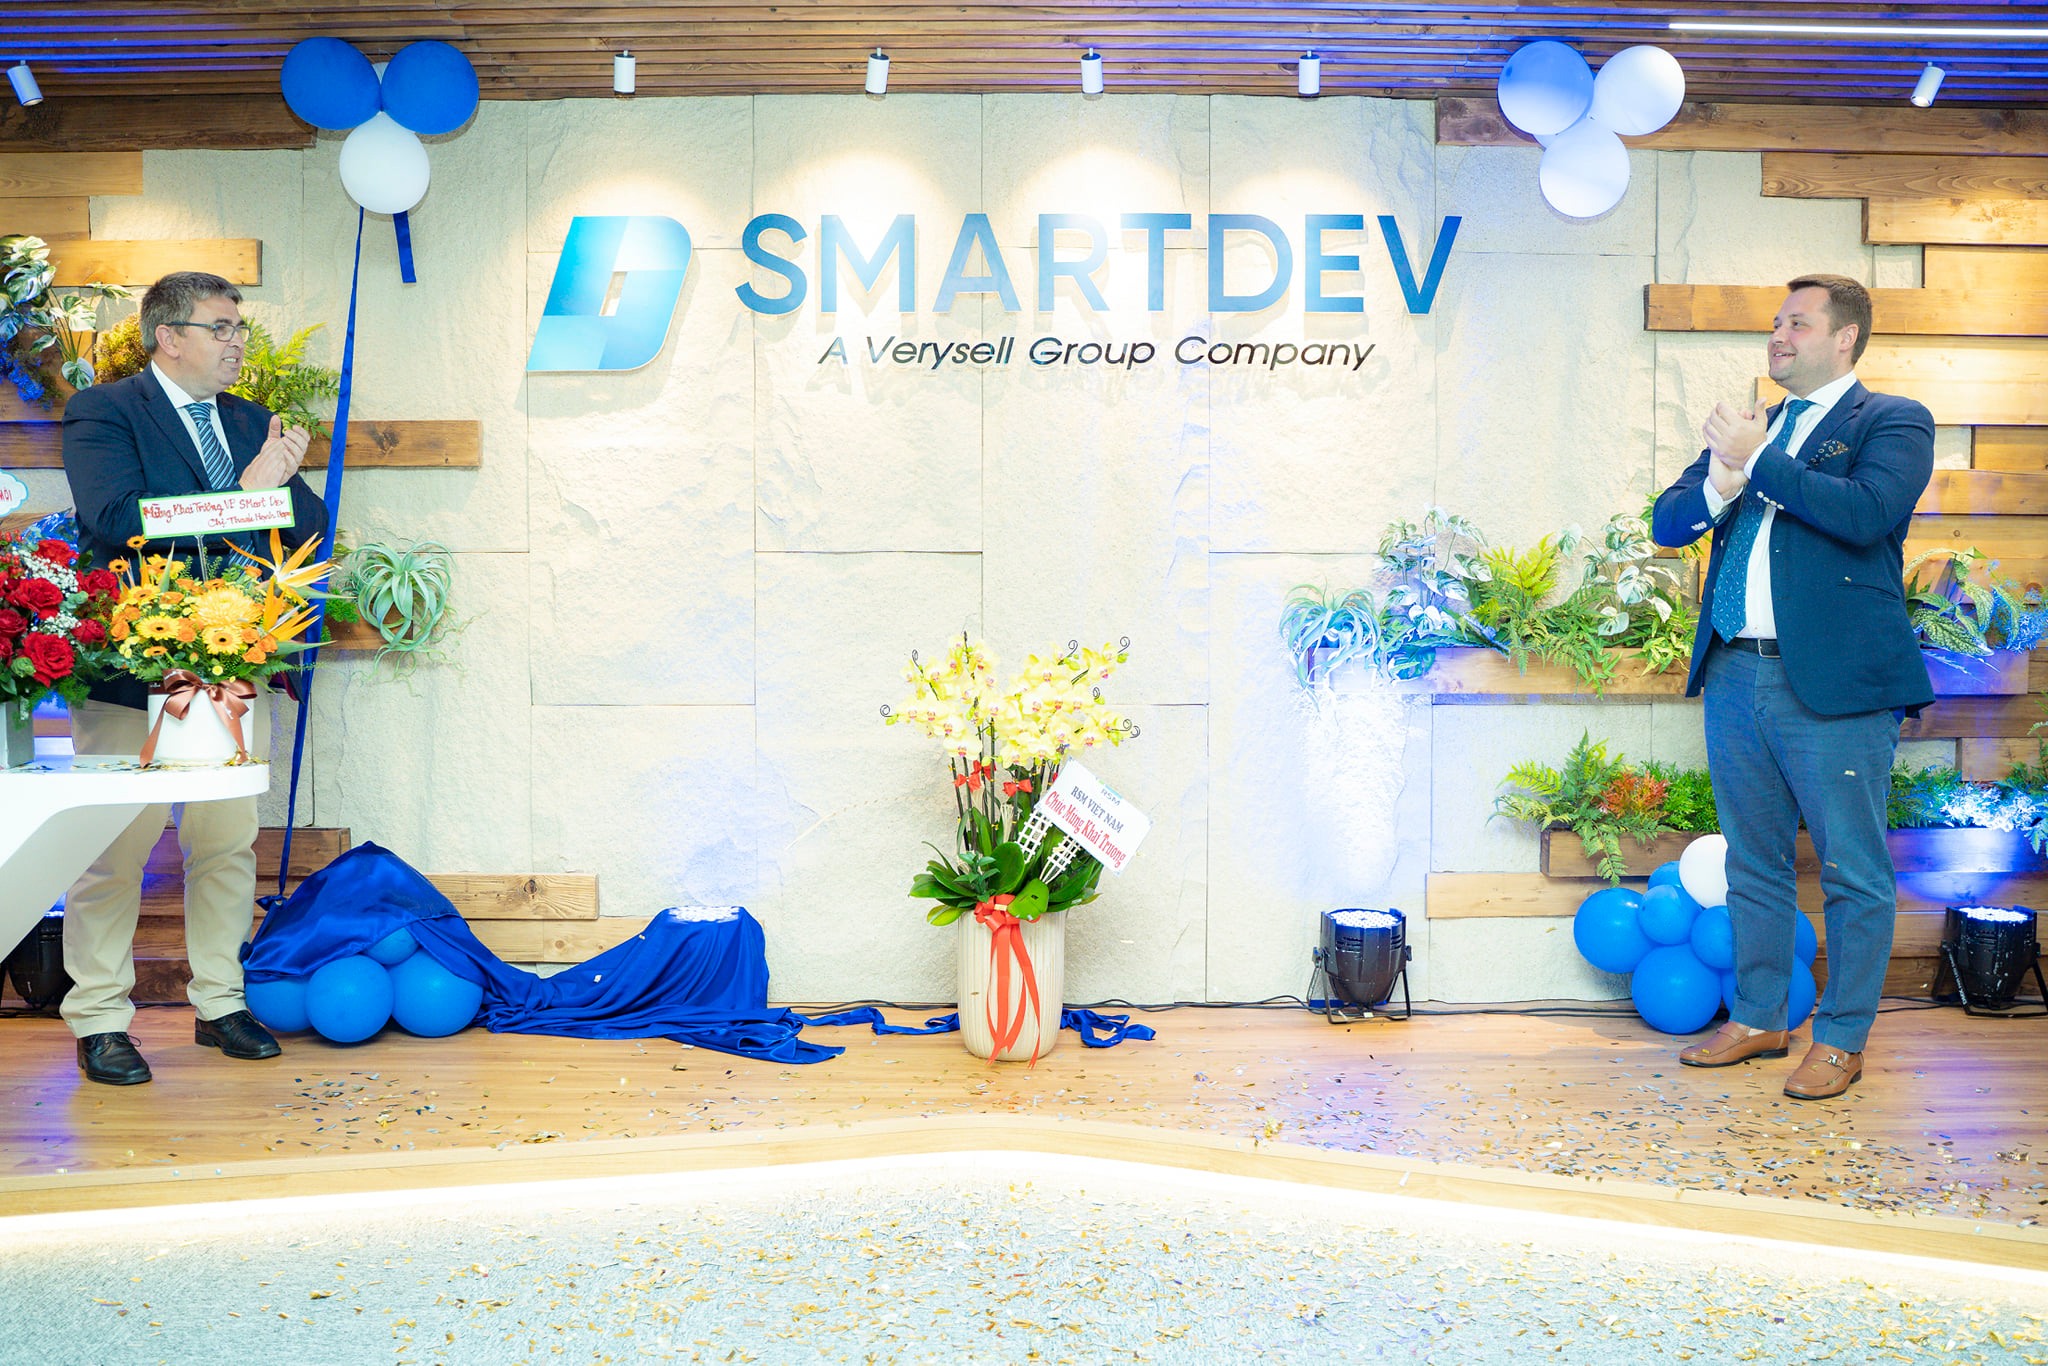 smartdev lead photo 2